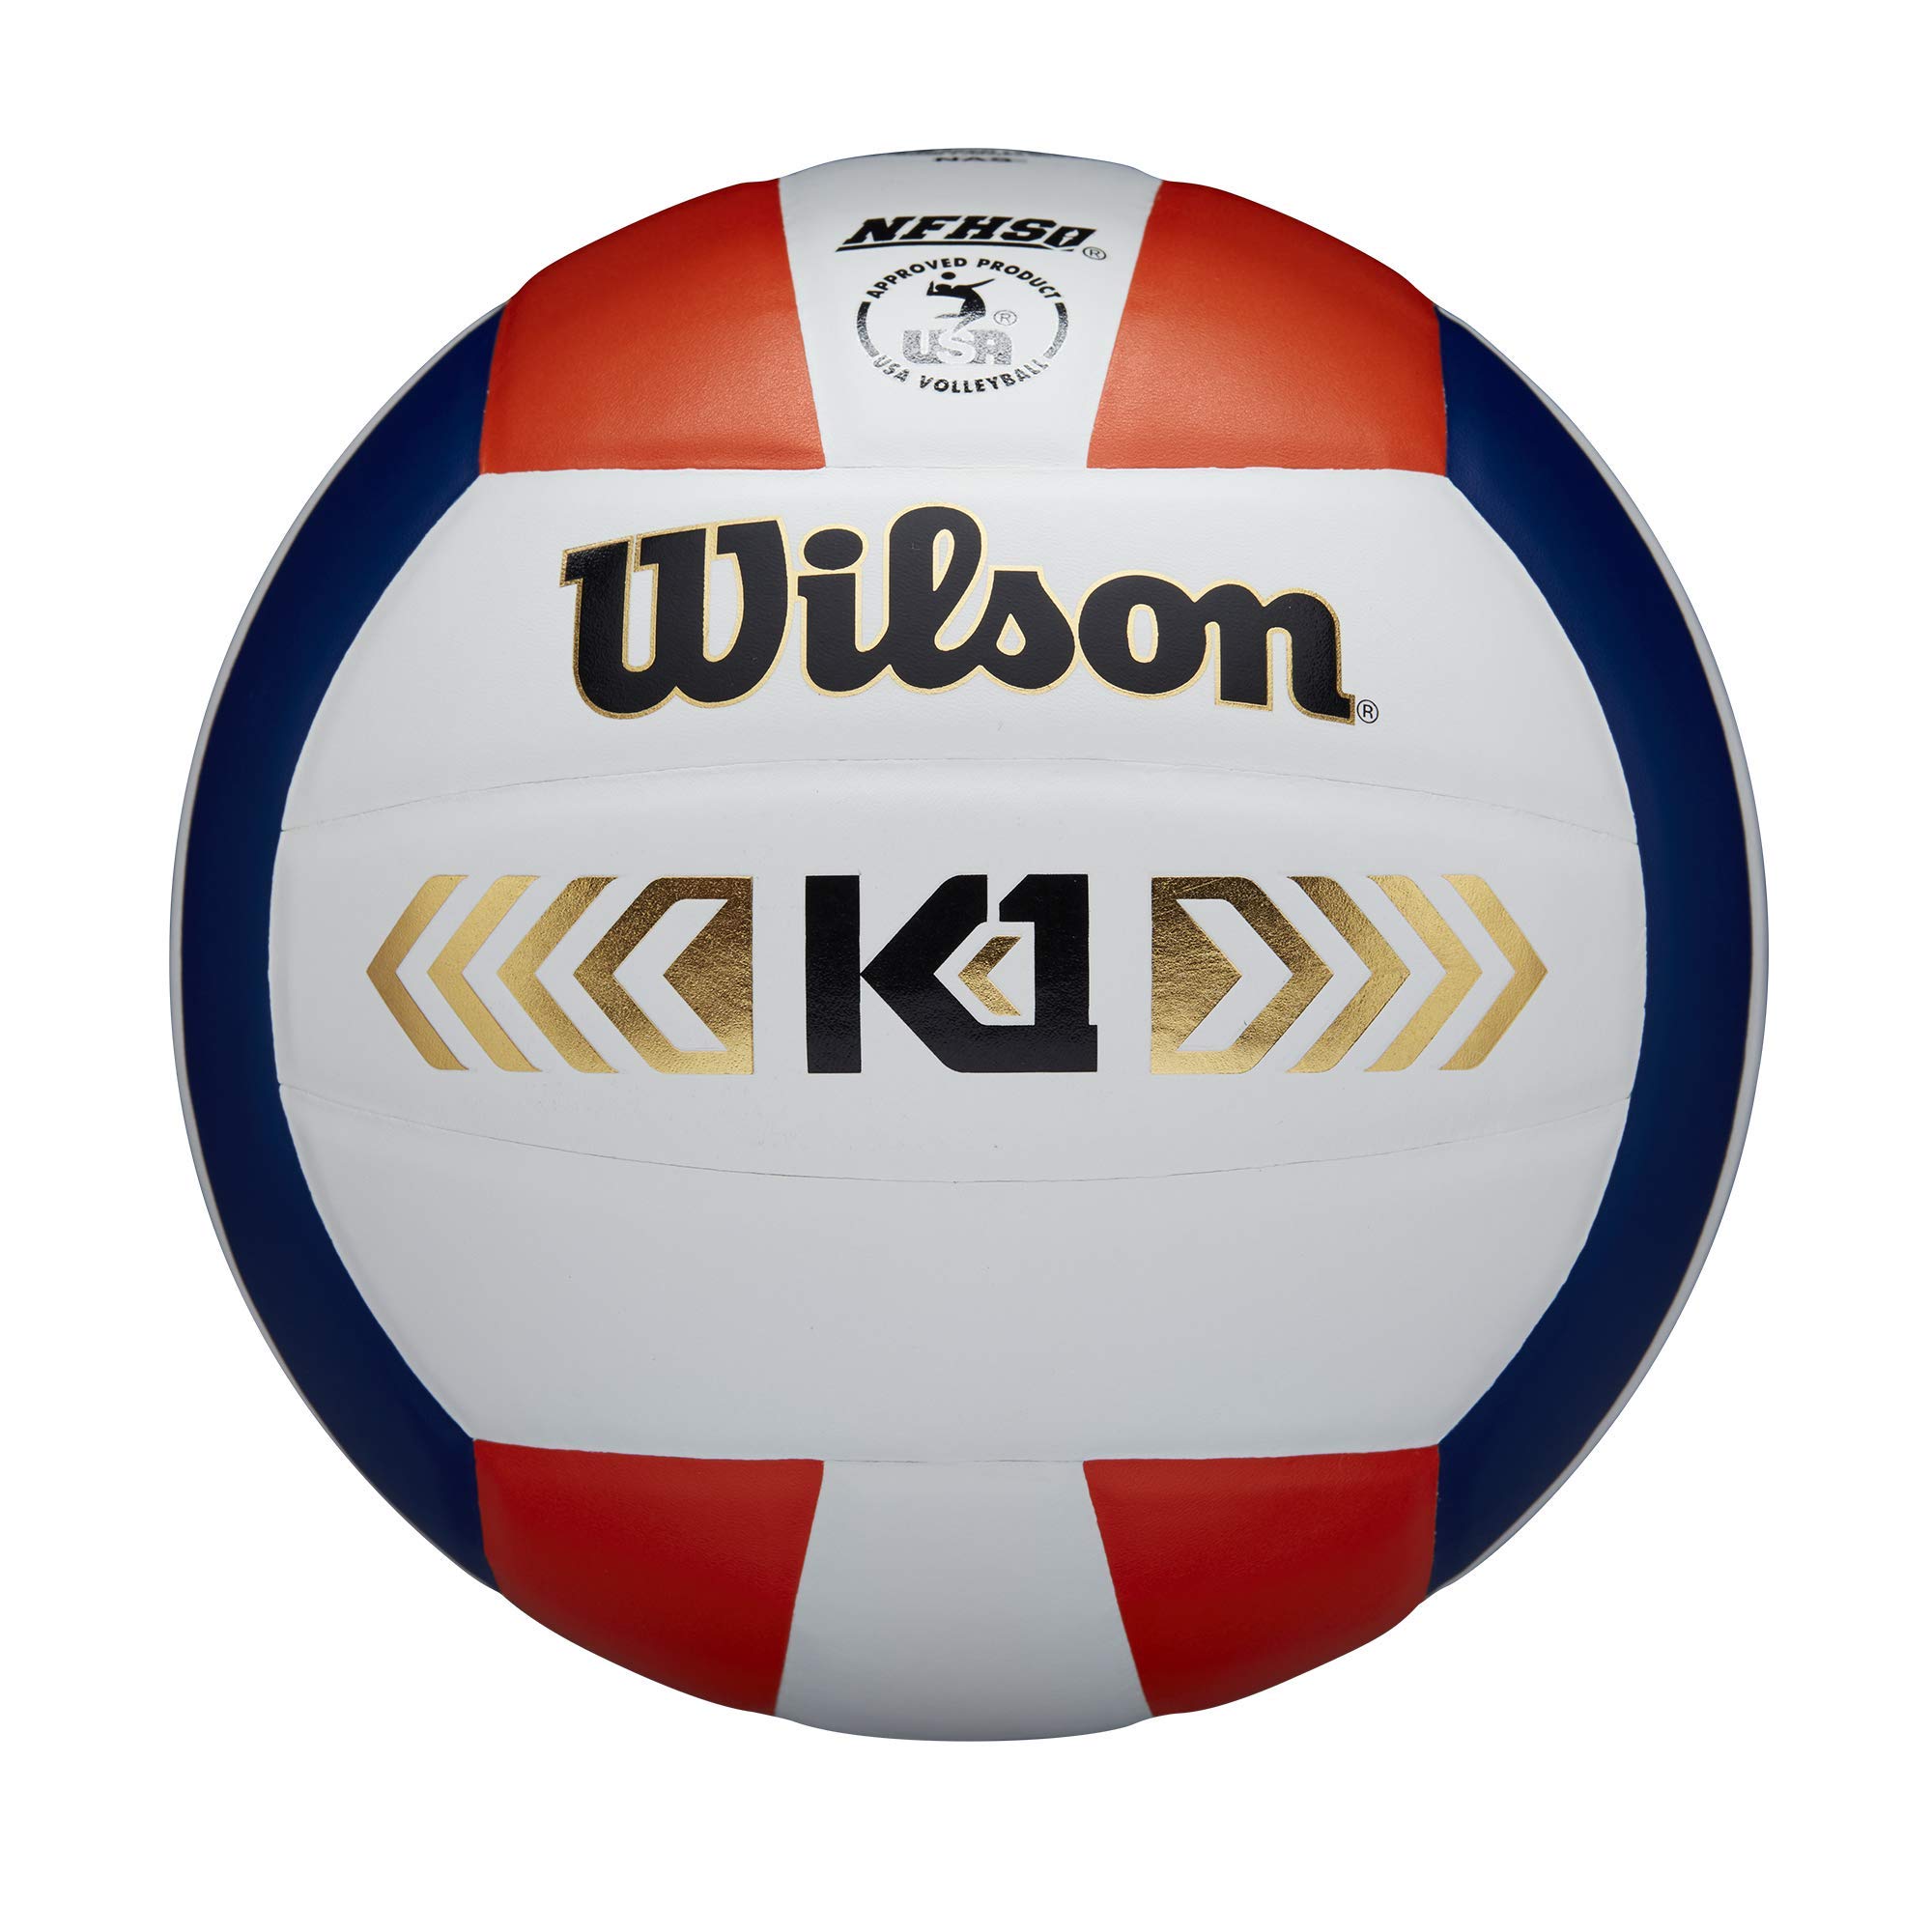 WILSON Indoor Game Volleyballs - Official Size